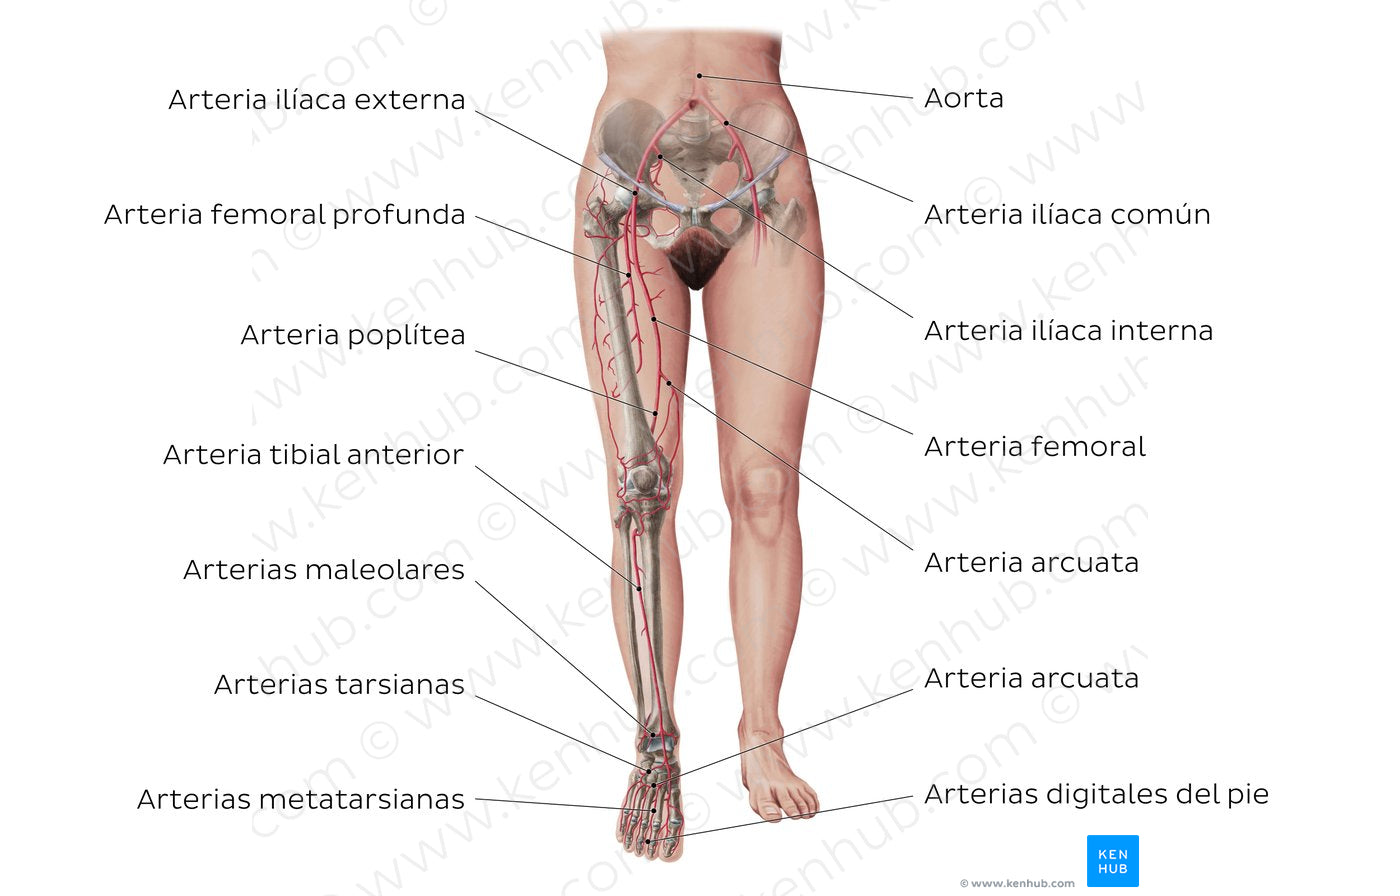 Main arteries of the lower limb (Spanish)